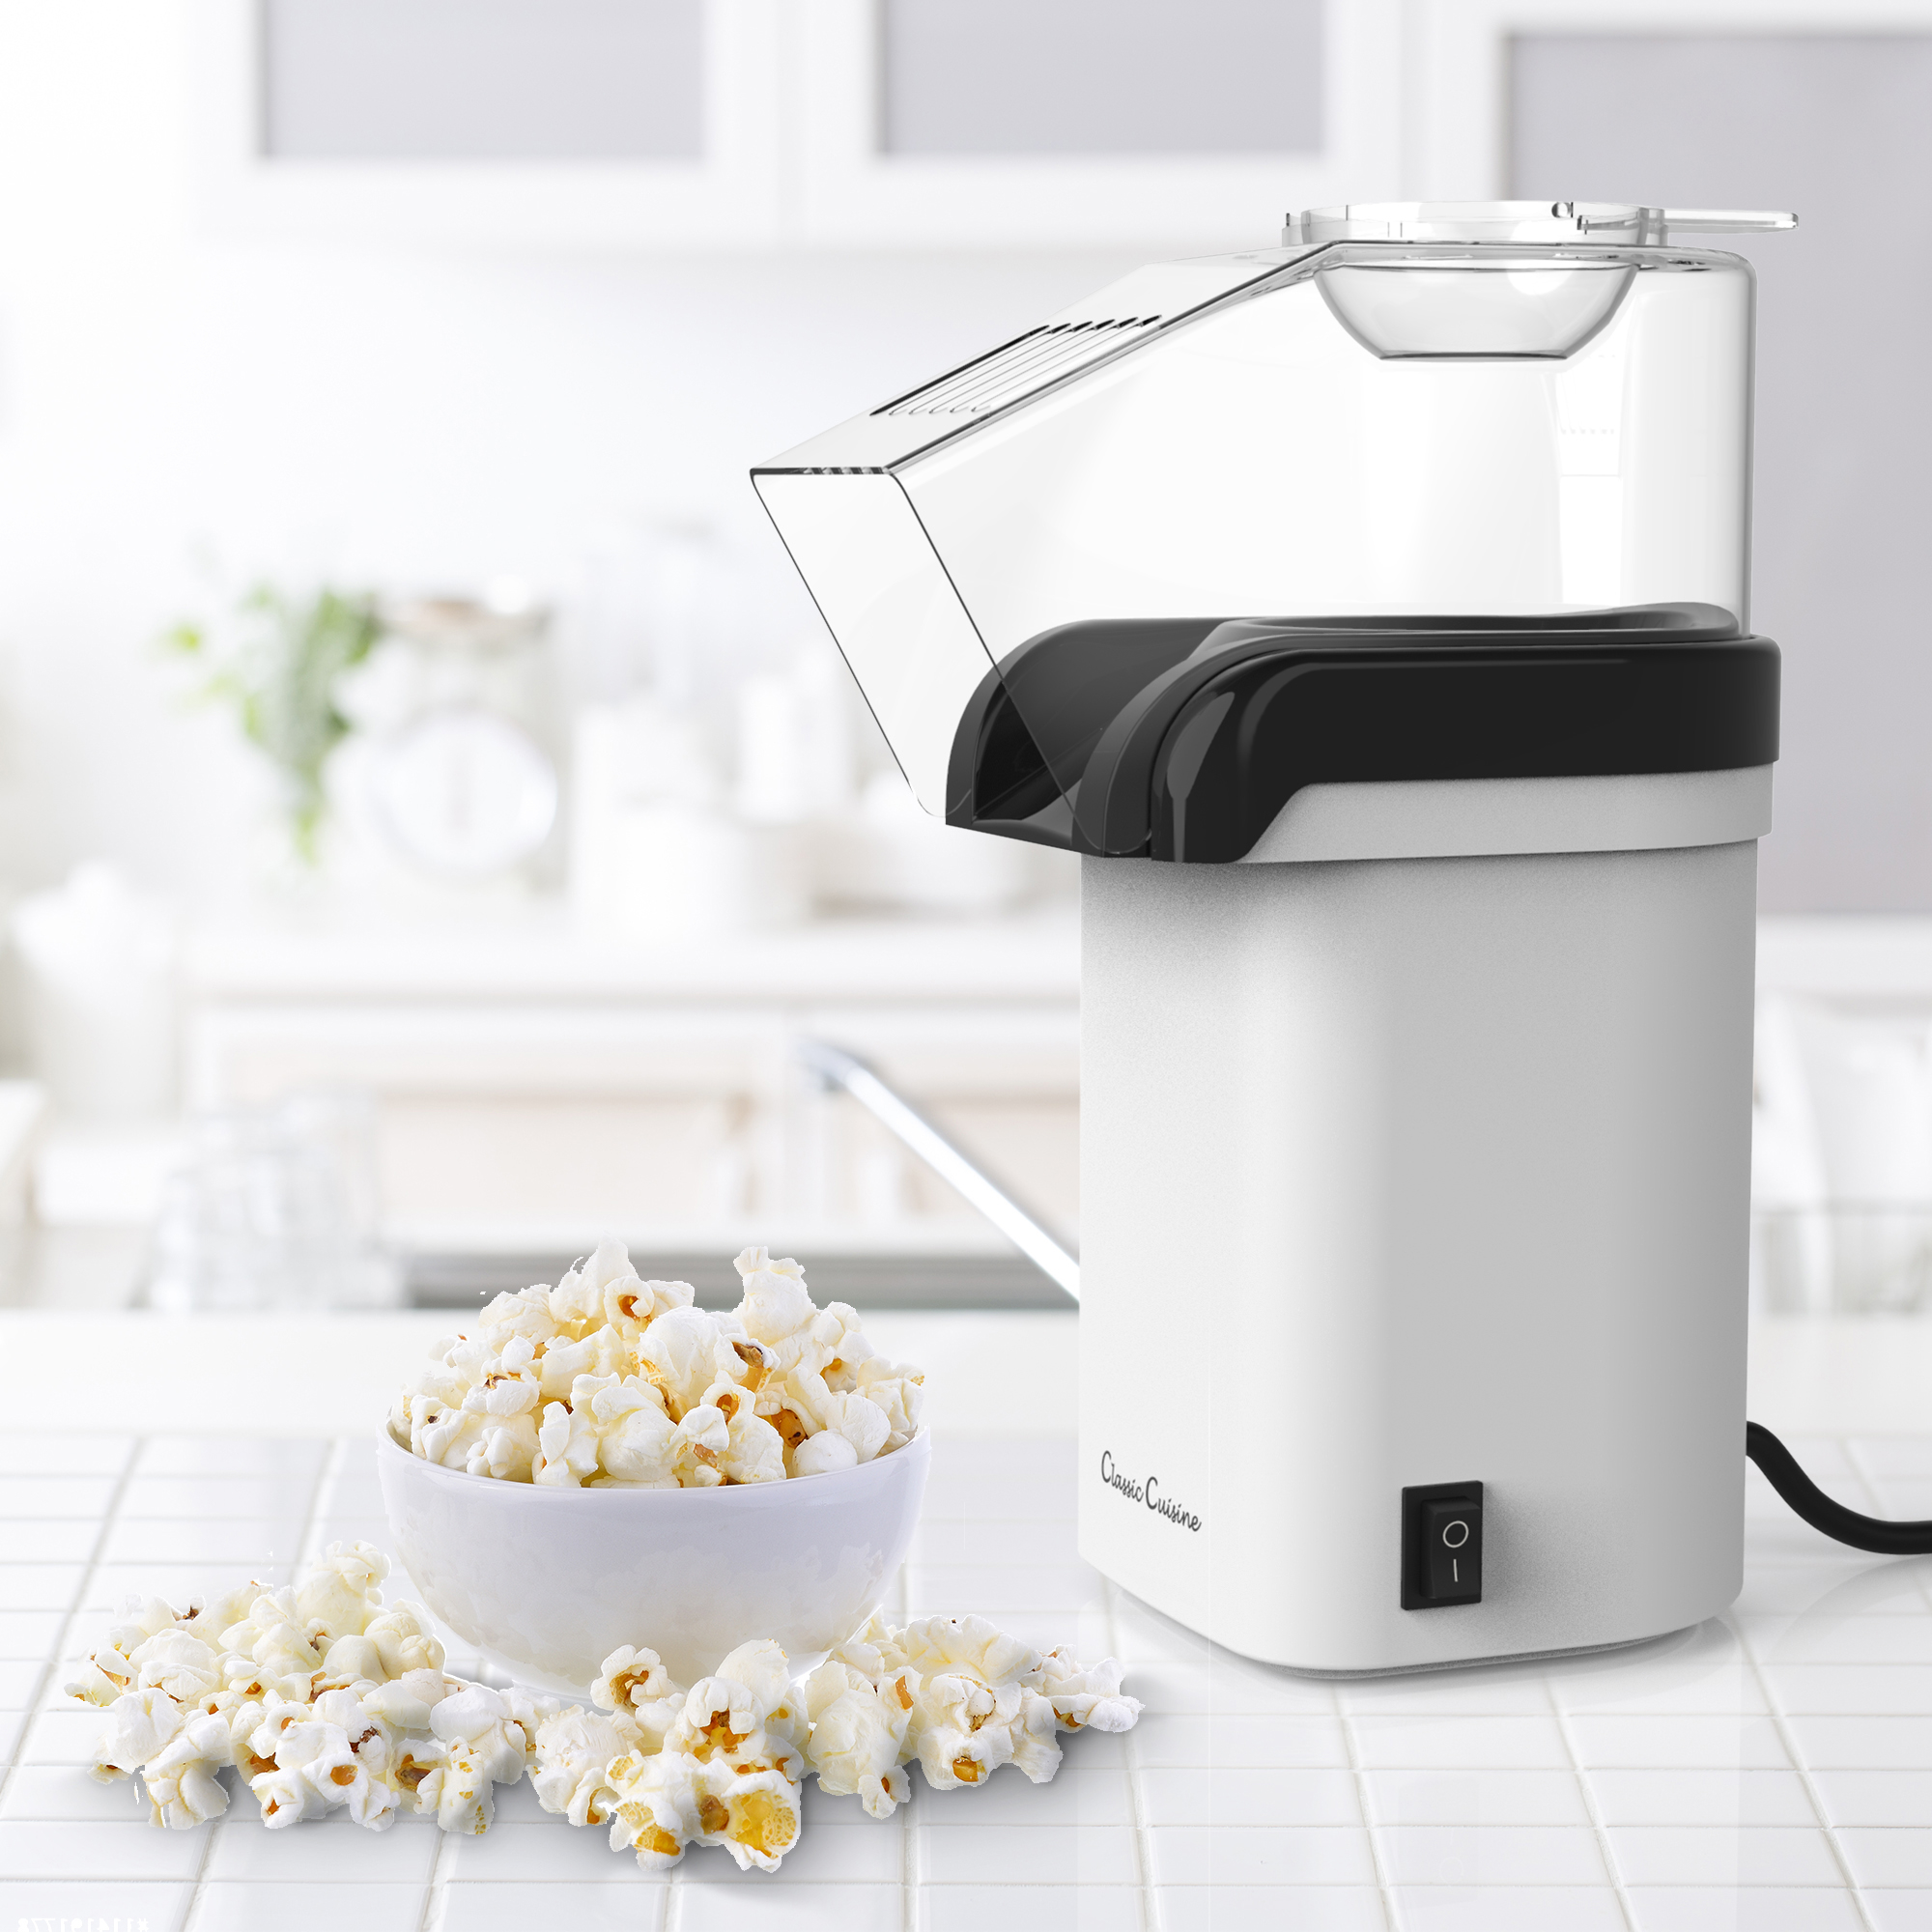 Hot Air Electric Popcorn Popper Maker Machine Healthy No Oil Popcorn